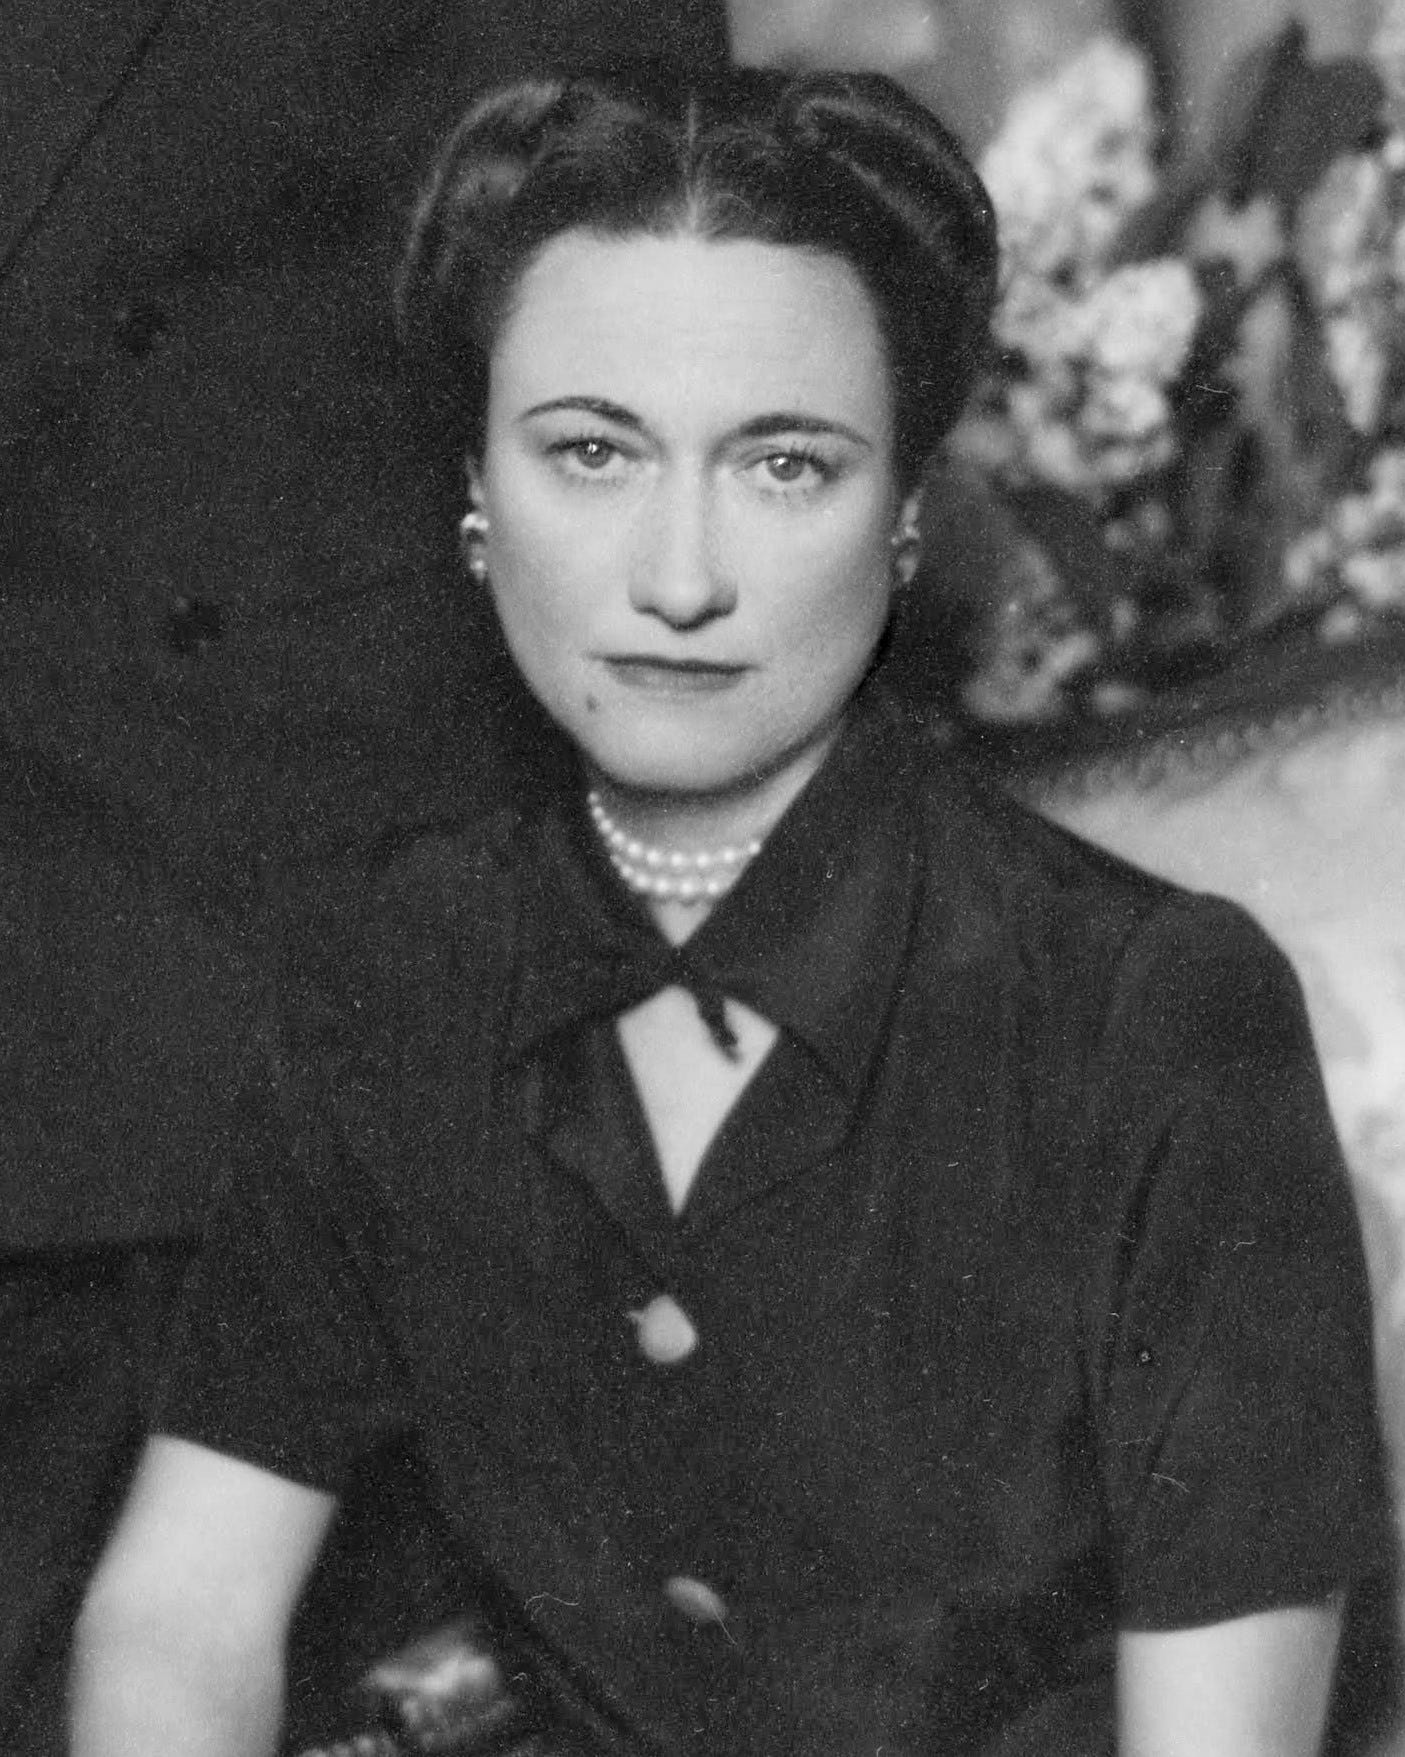 Photograph of Wallis Simpson